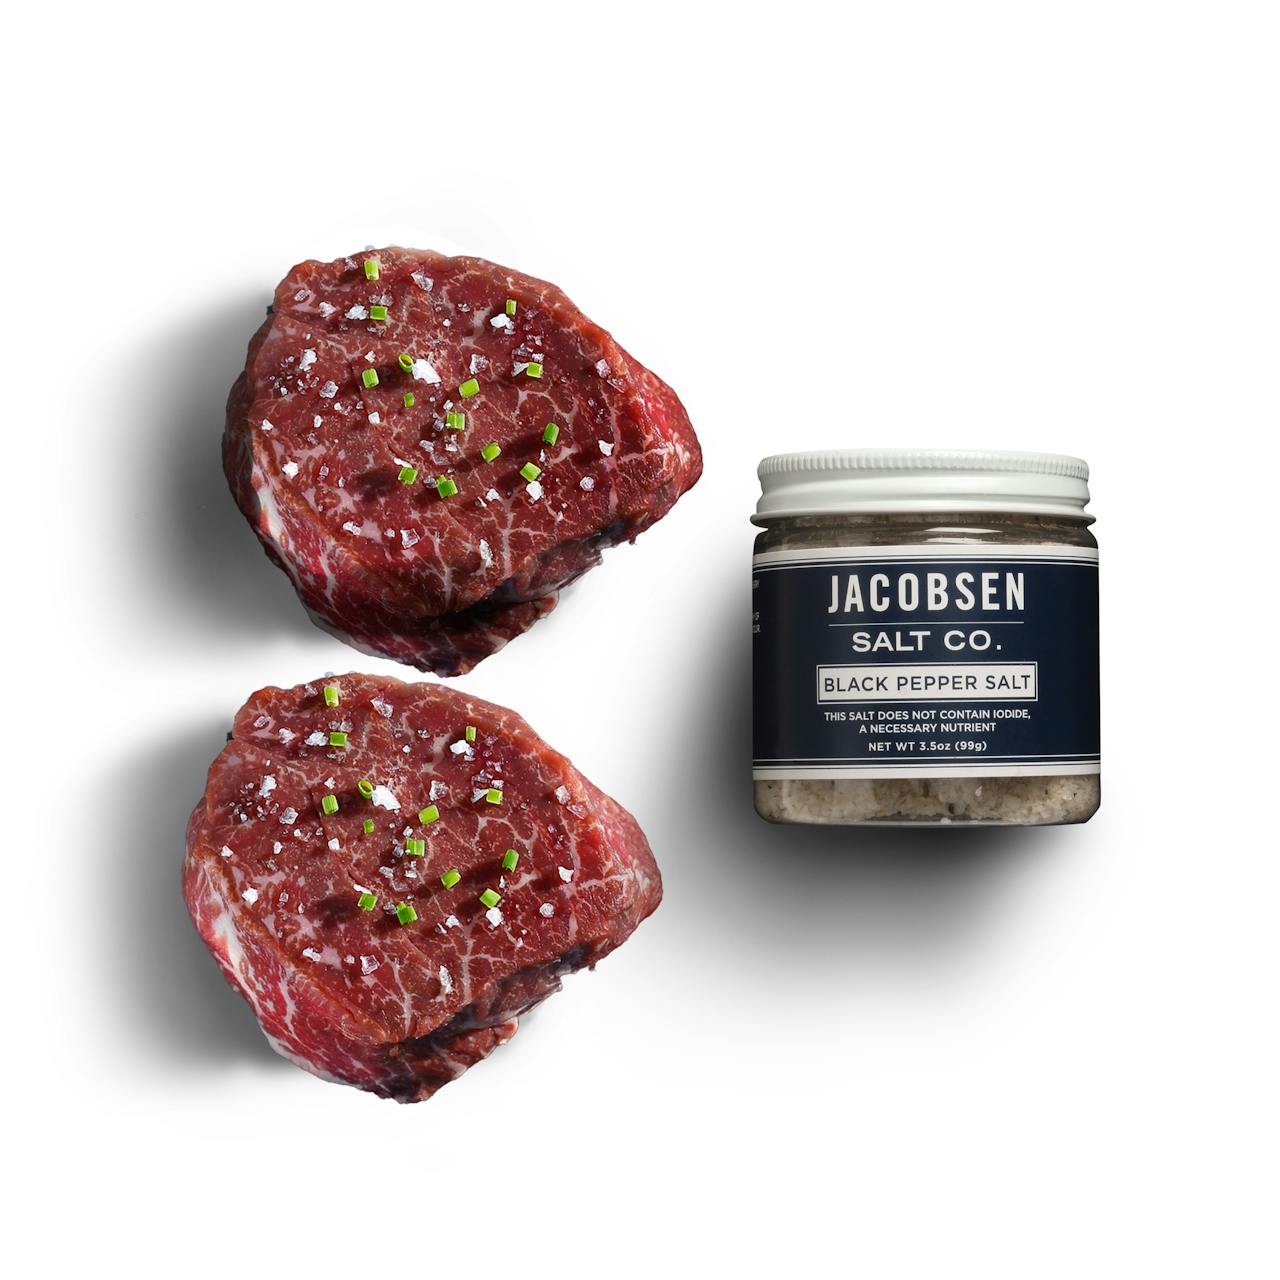 Snake River Farms Two 8 oz Filet Mignon Steaks + Jacobsen Black Pepper Infused Salt package